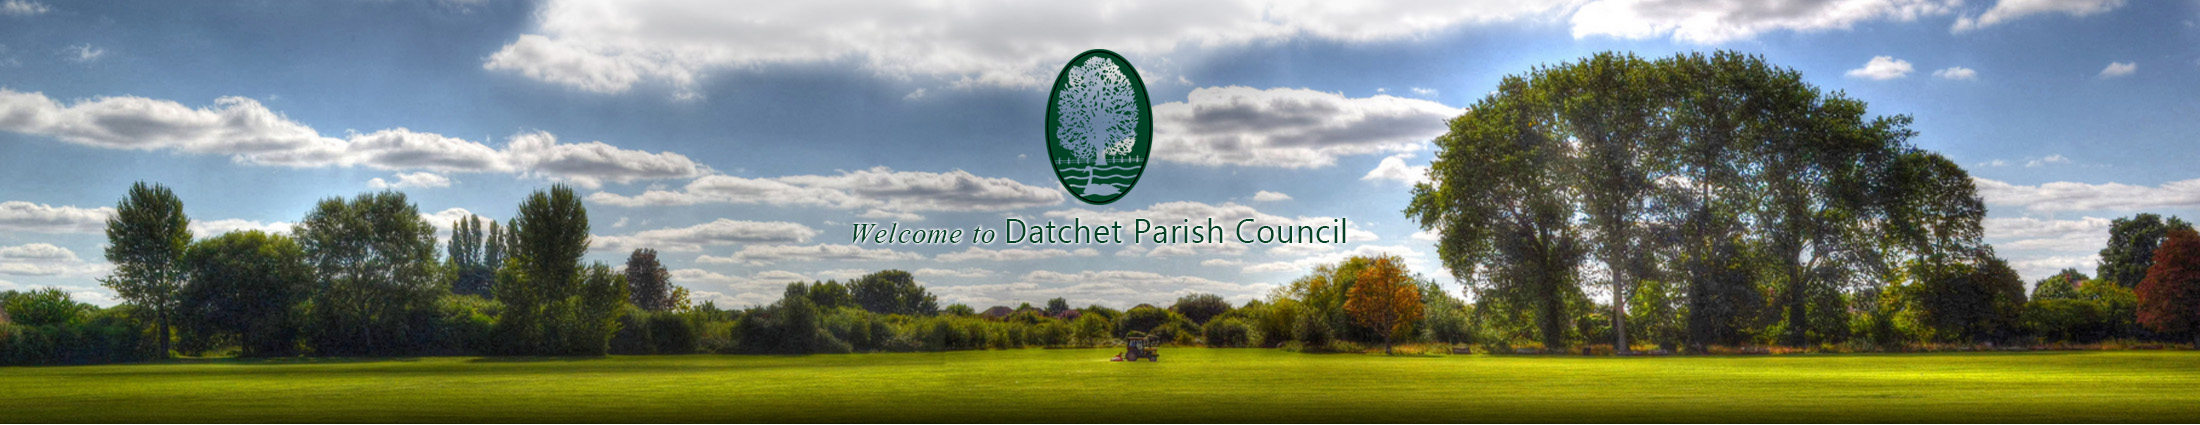 Header Image for Datchet Parish Council